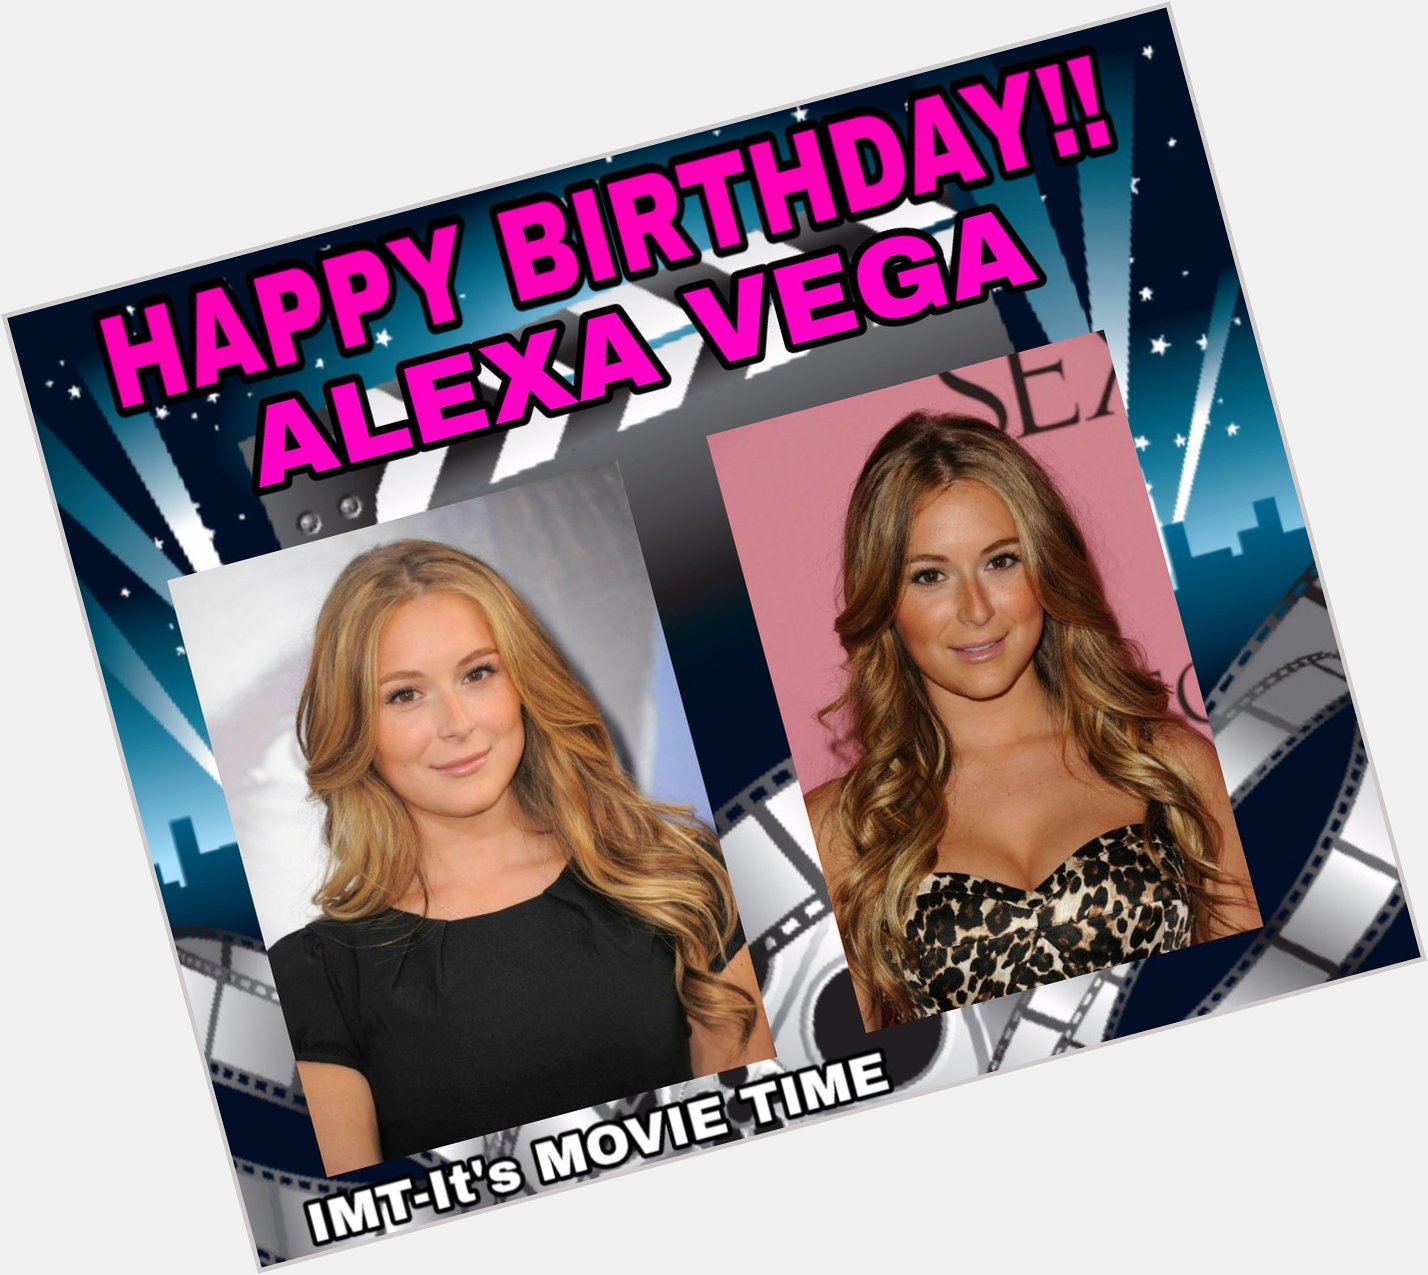 Happy Birthday to the Beautiful Alexa Vega! The actress is celebrating 32 years. 